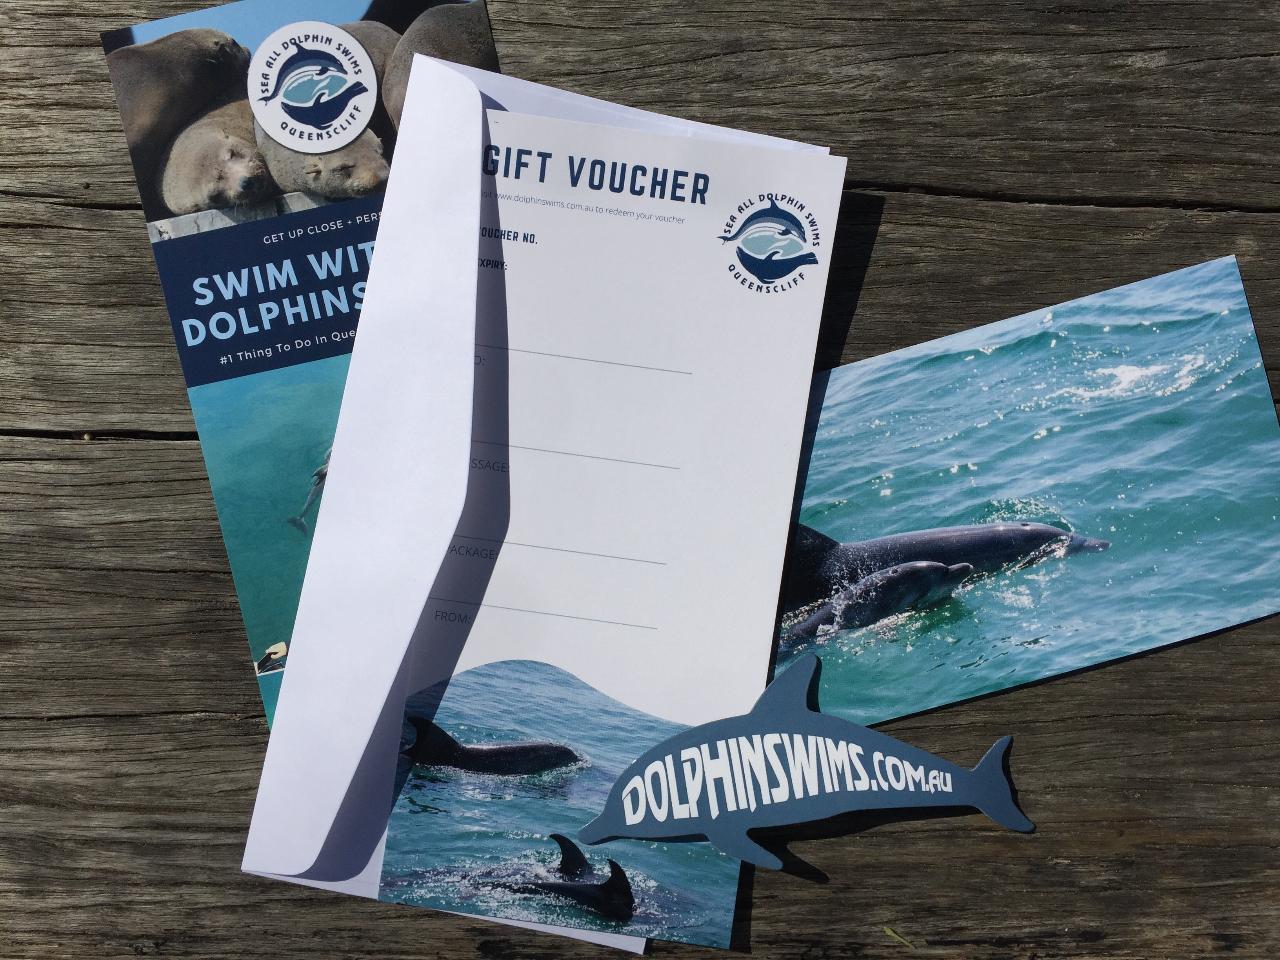 Seal & Dolphin Swim Tour - Gift Voucher